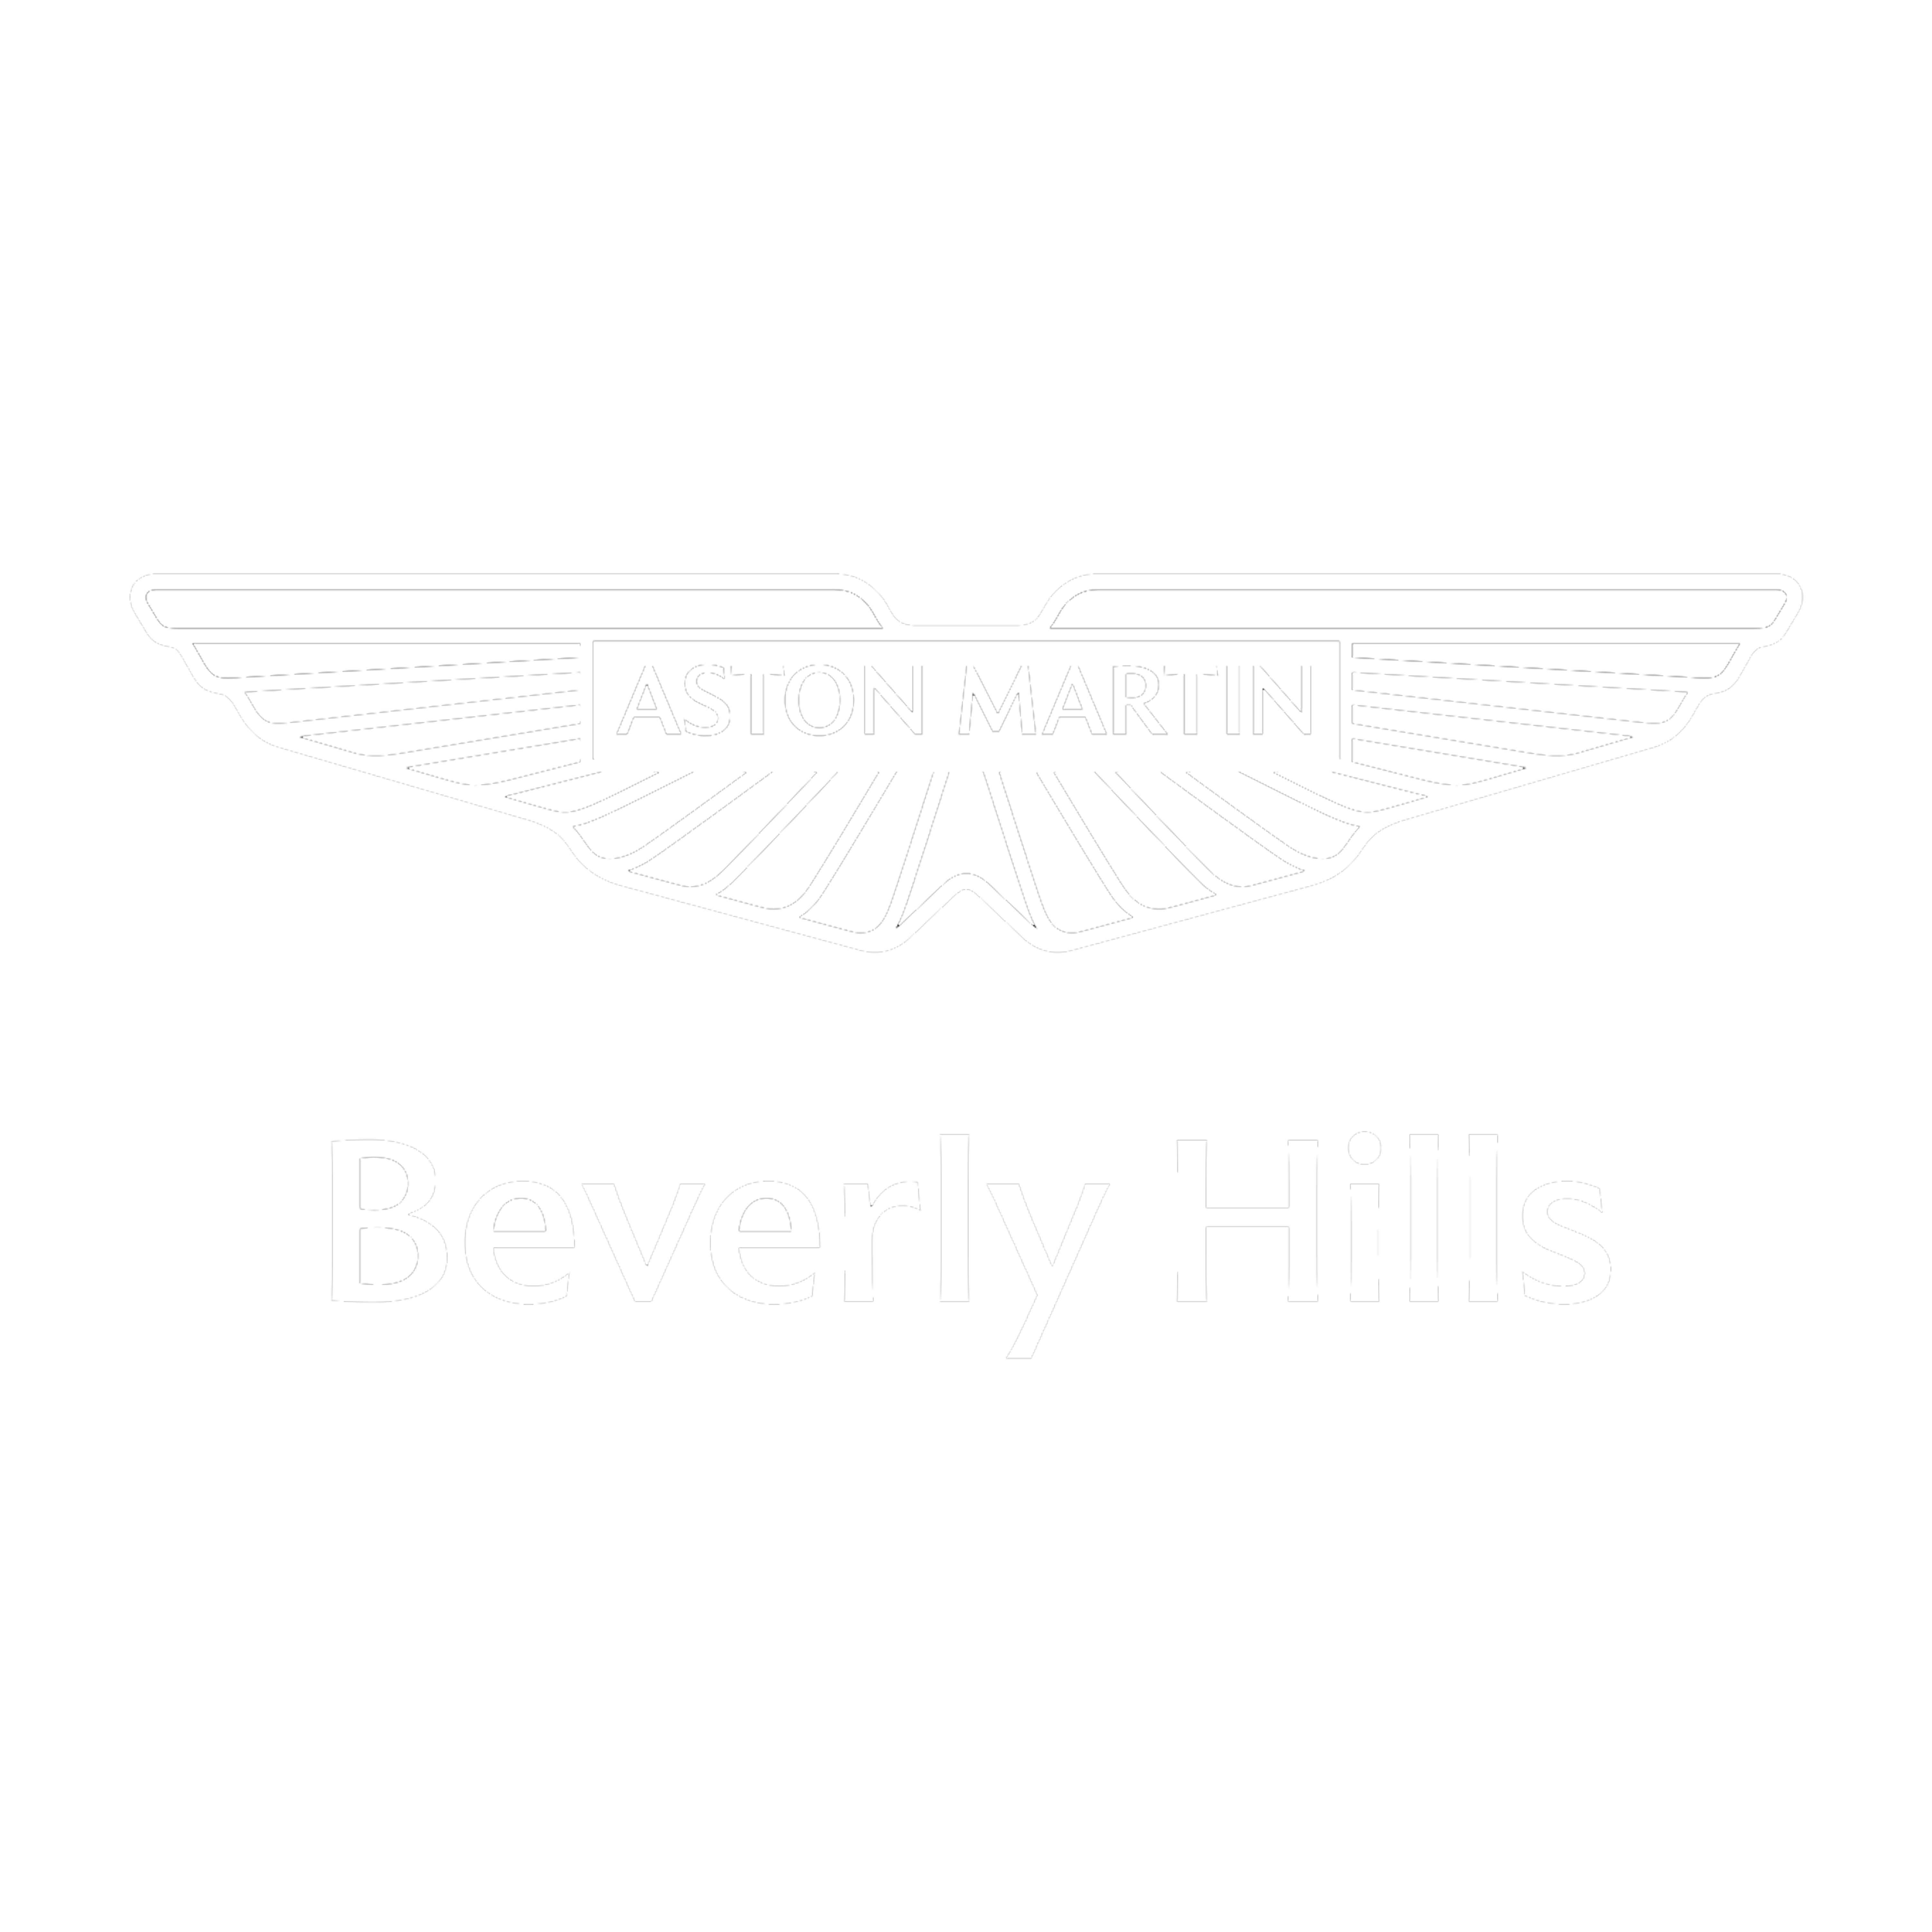 Aston Martin Beverly Hills